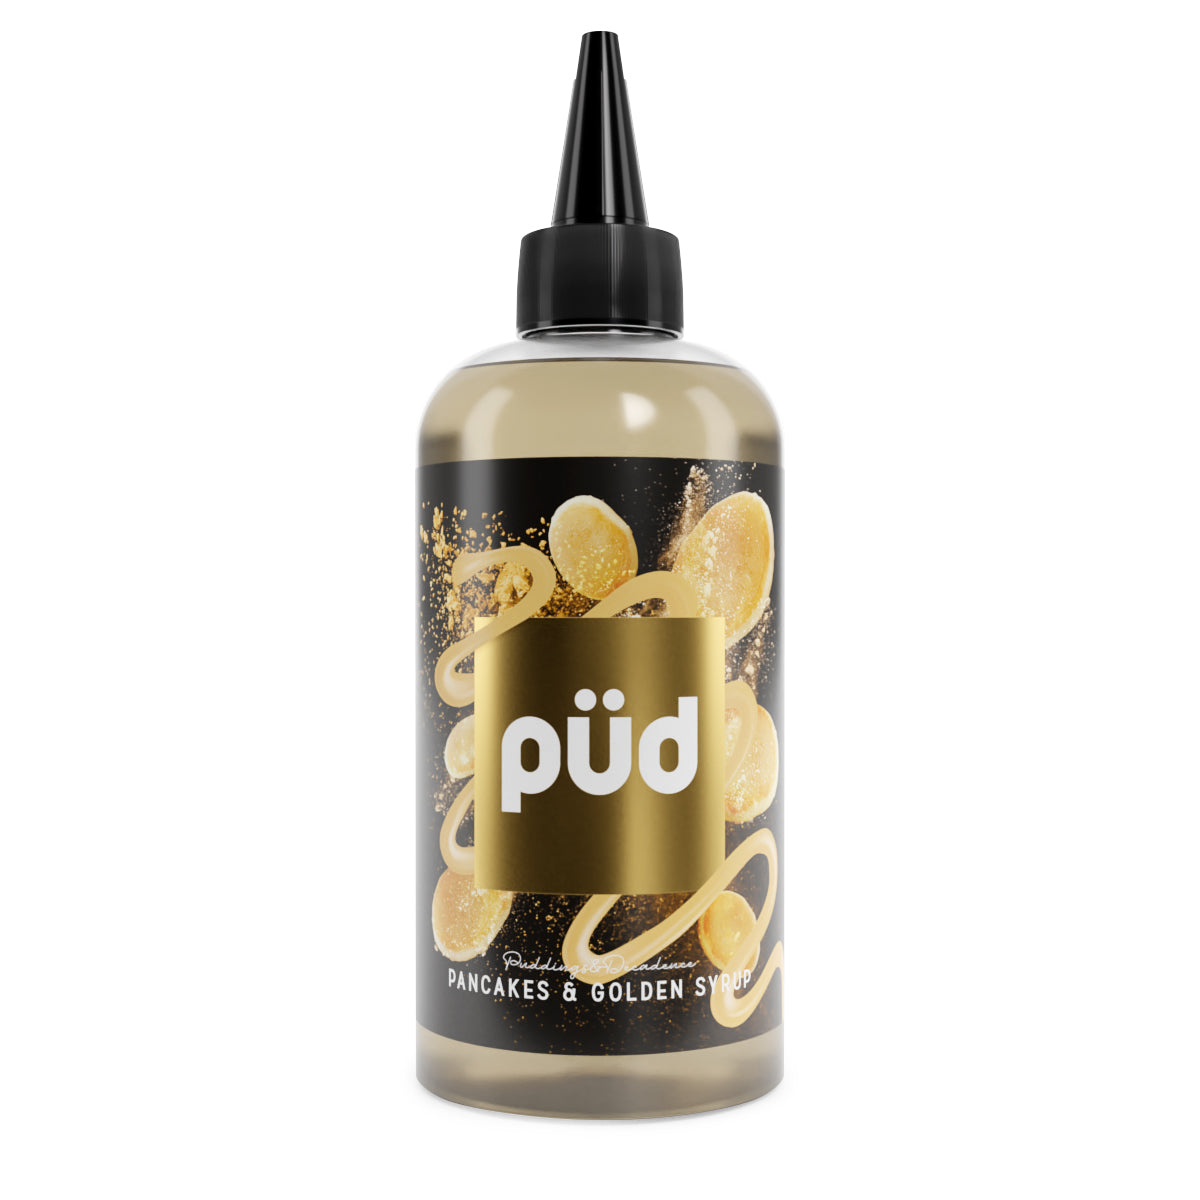 PUD - Pudding & Decadence - Pancakes & Golden syrup 200ml - My Vape Store UK